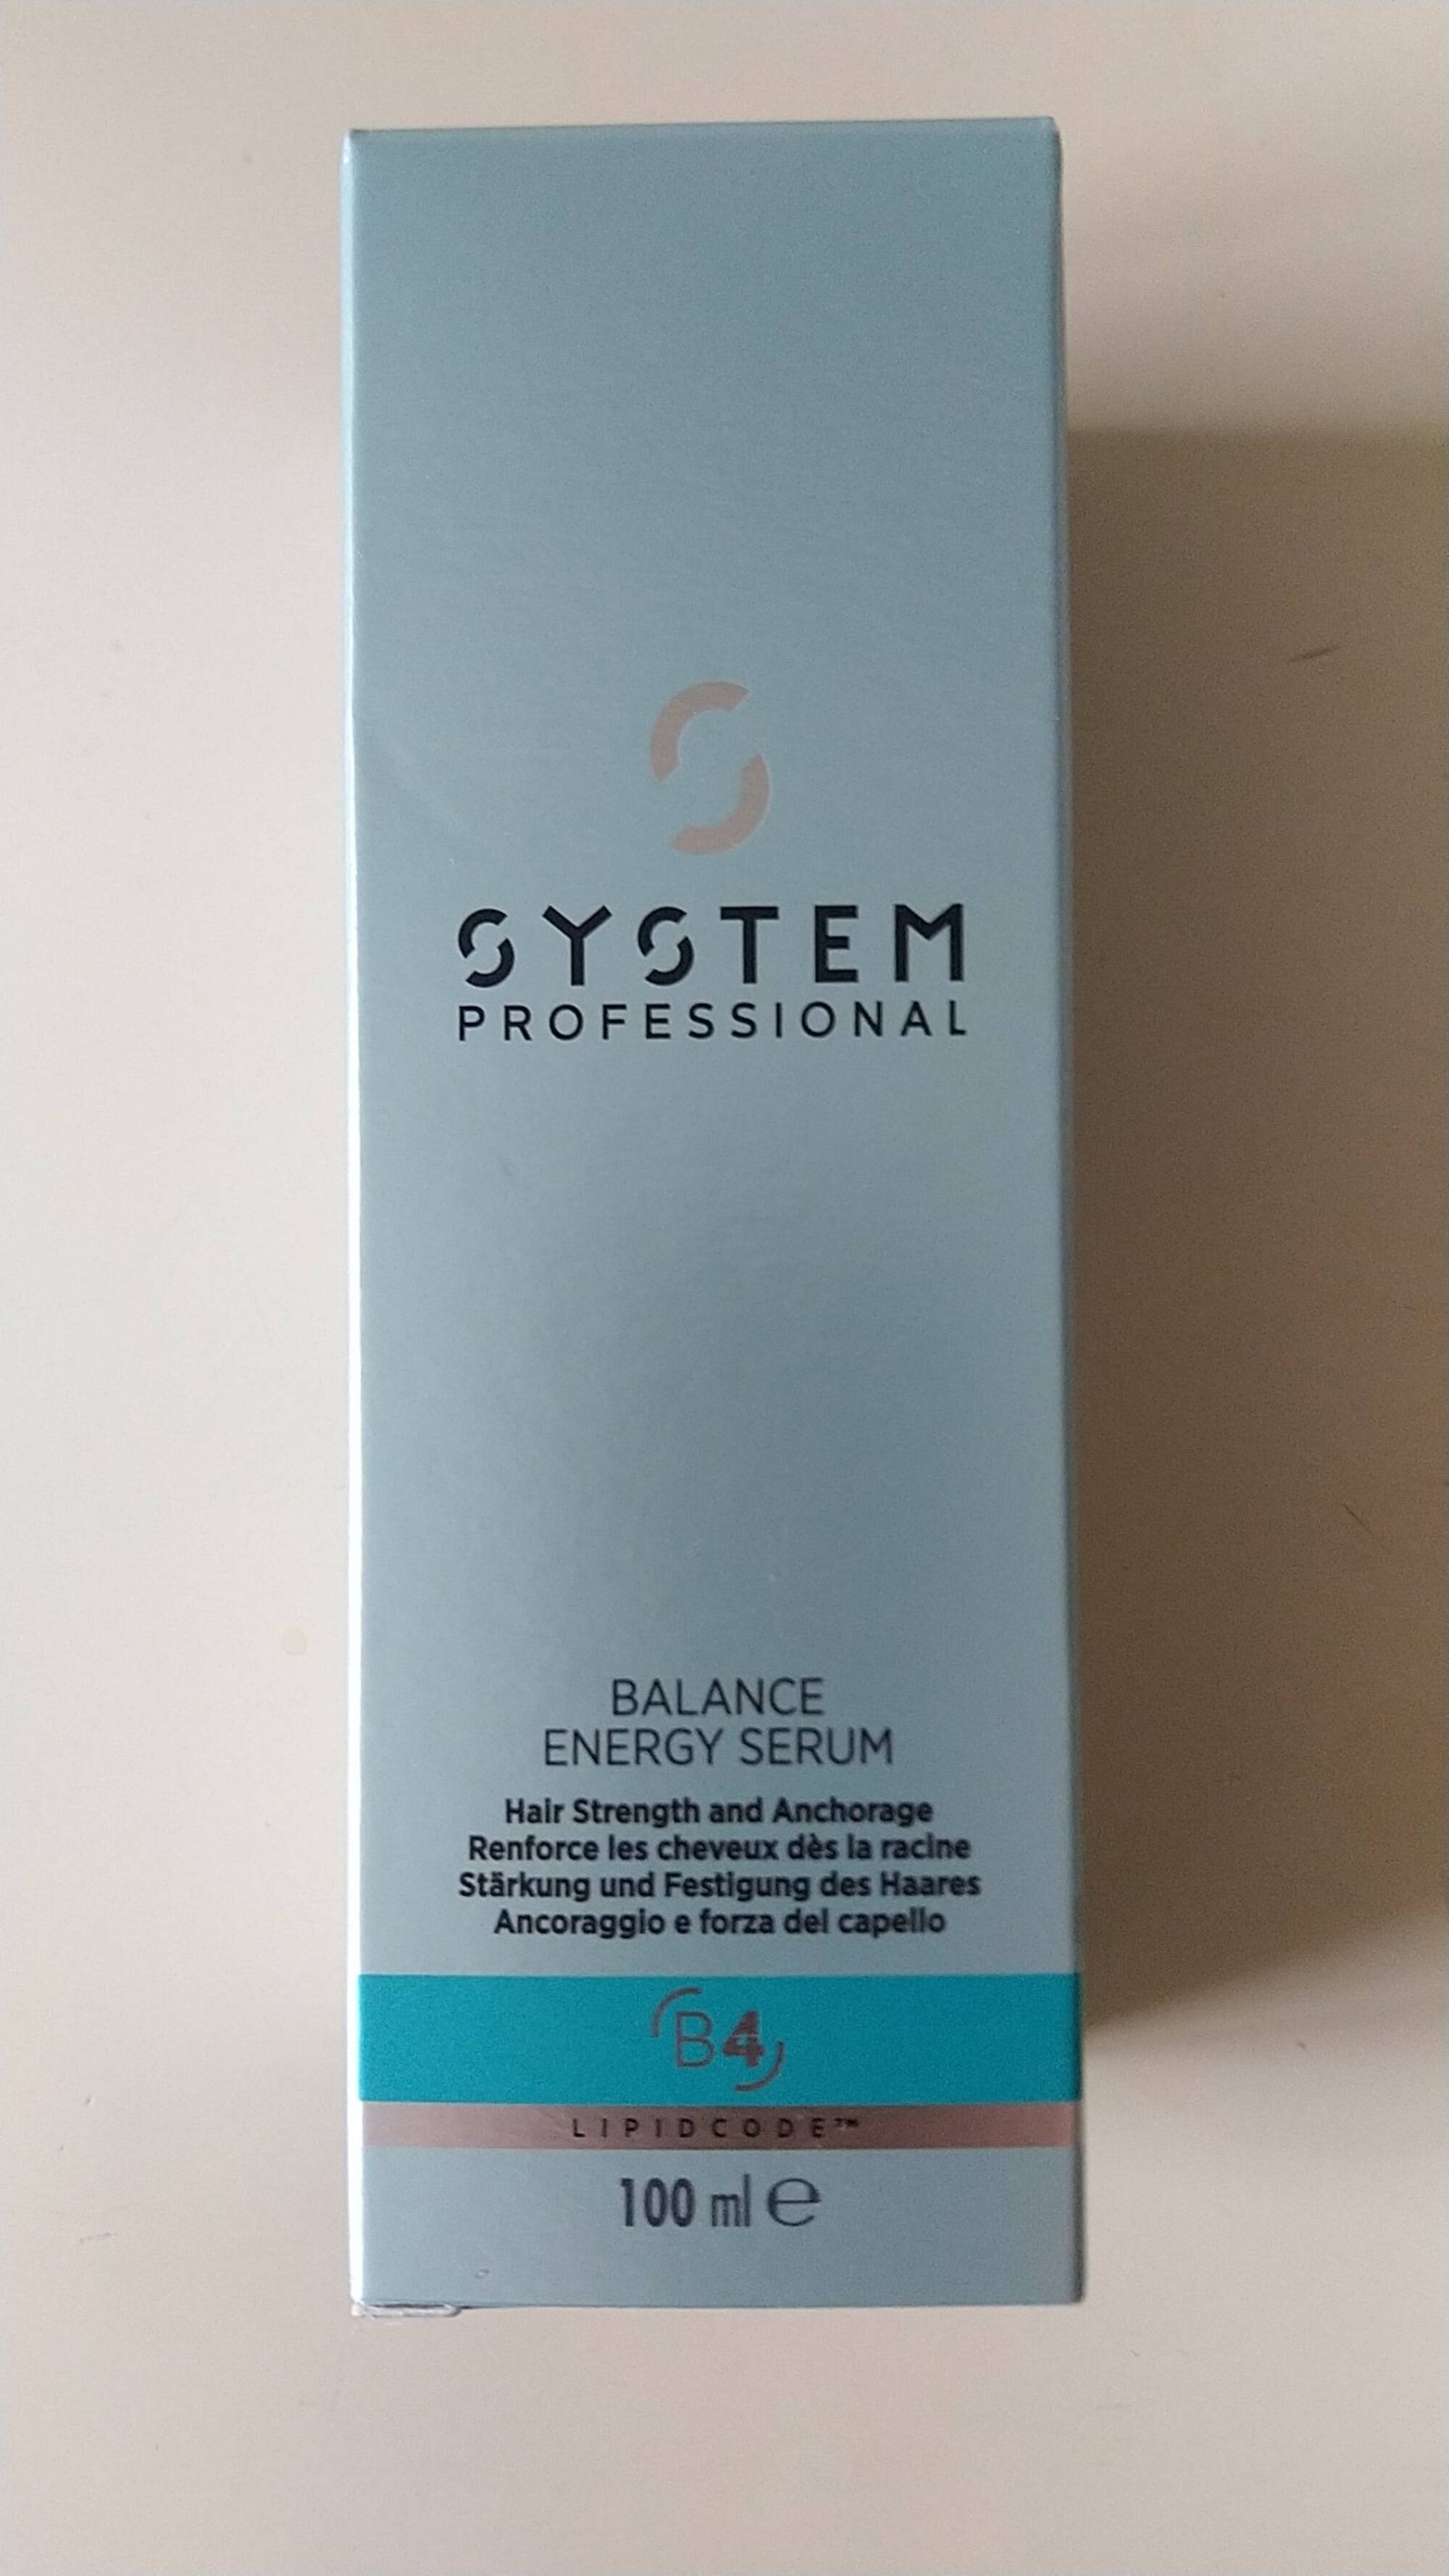 SYSTEM PROFESSIONAL - Balance energy serum